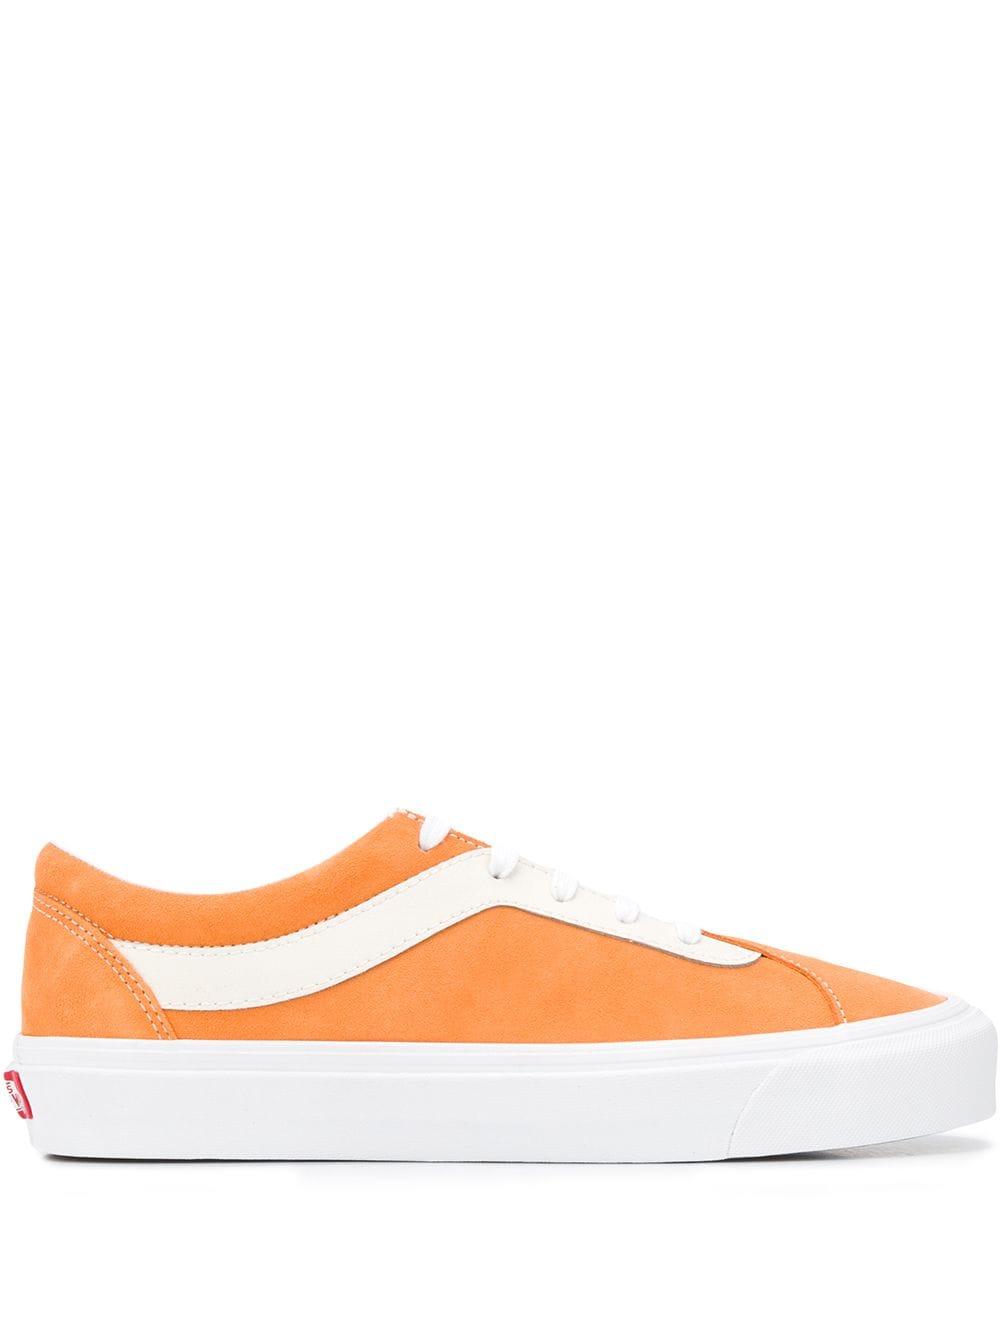 Vans Leather Platform Sole Sneakers in Orange for Men - Lyst